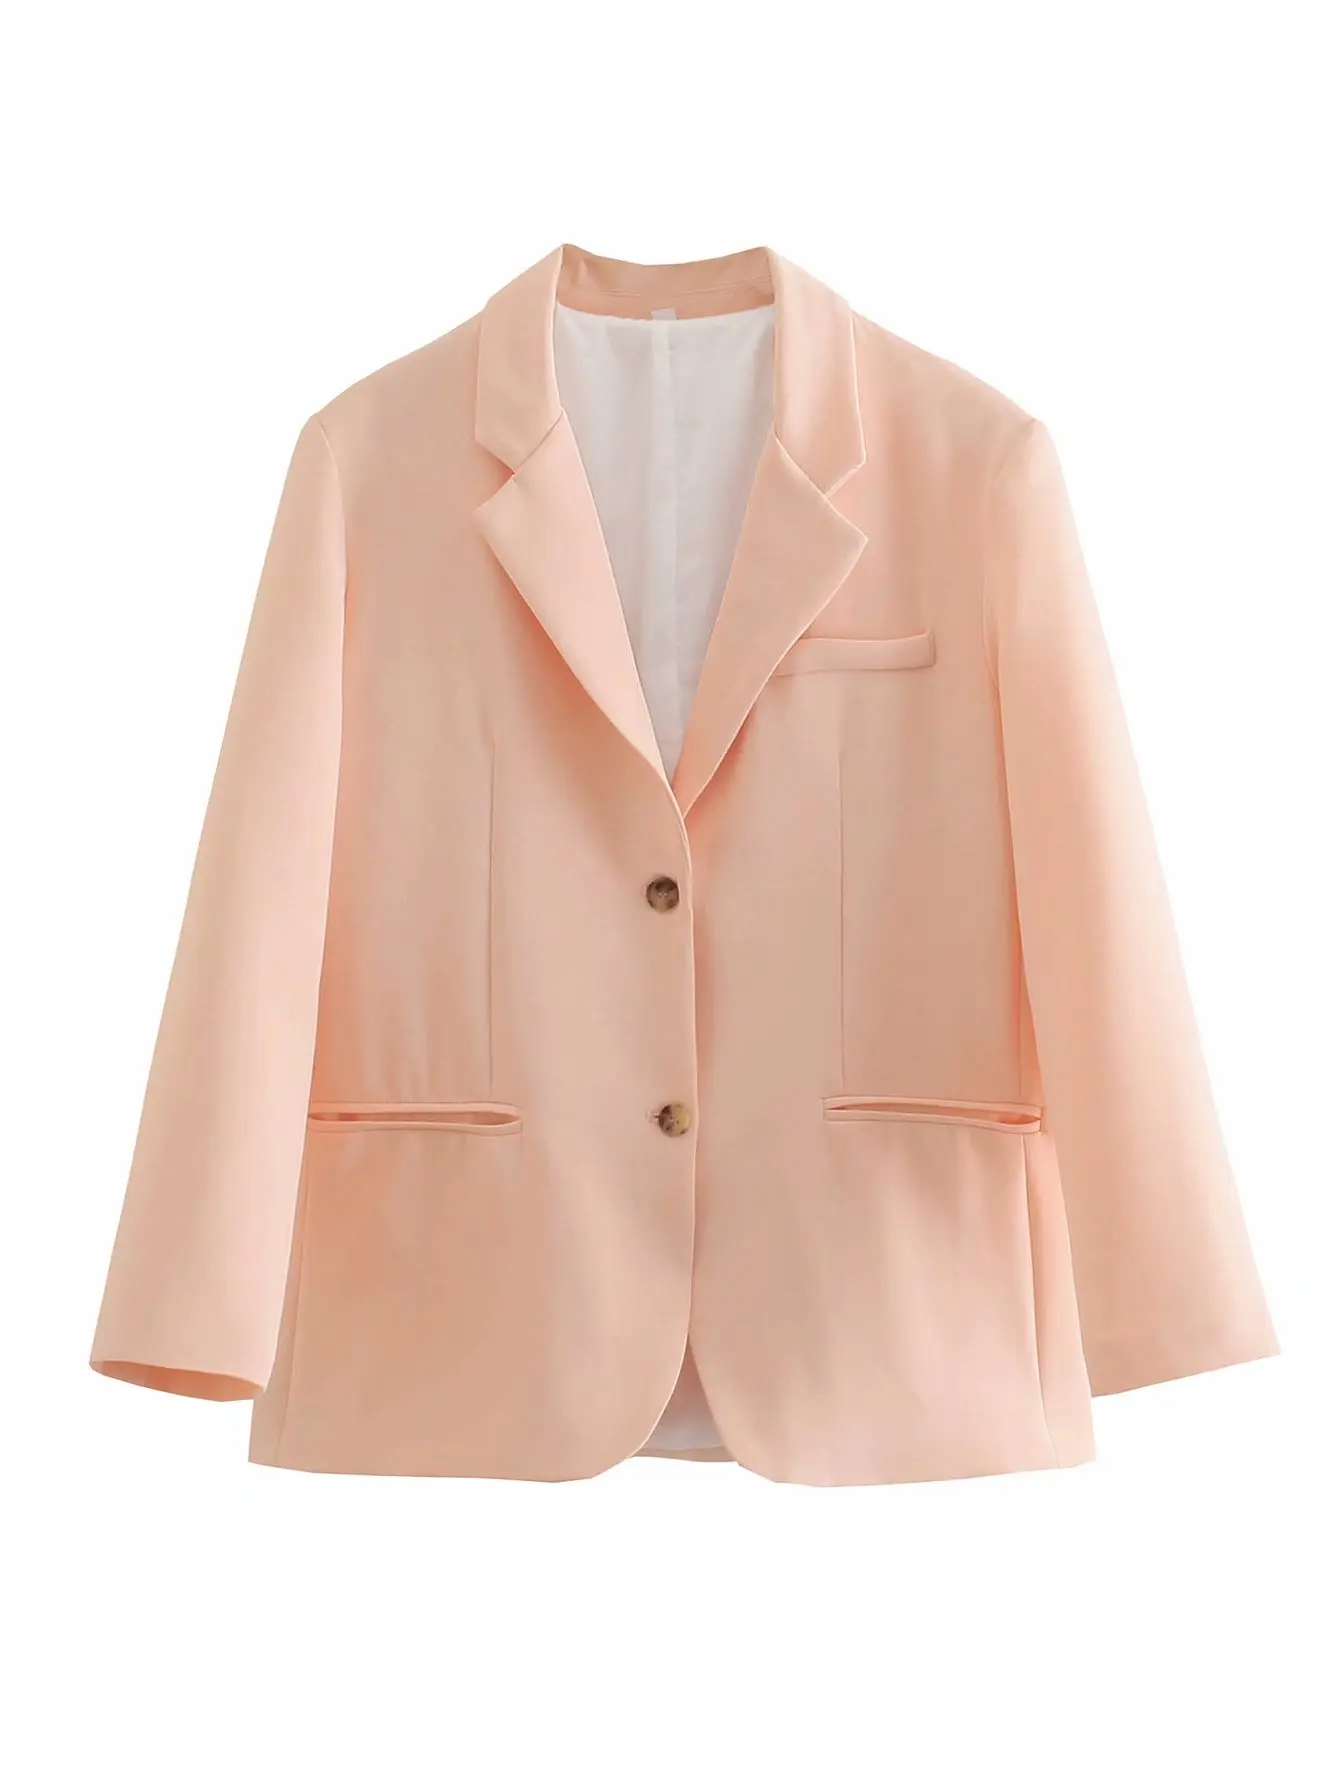 Toppies 2021 Women Cute Pink Blazer Single Button Jacket Ladies Suit Meble Ubrania veste femme